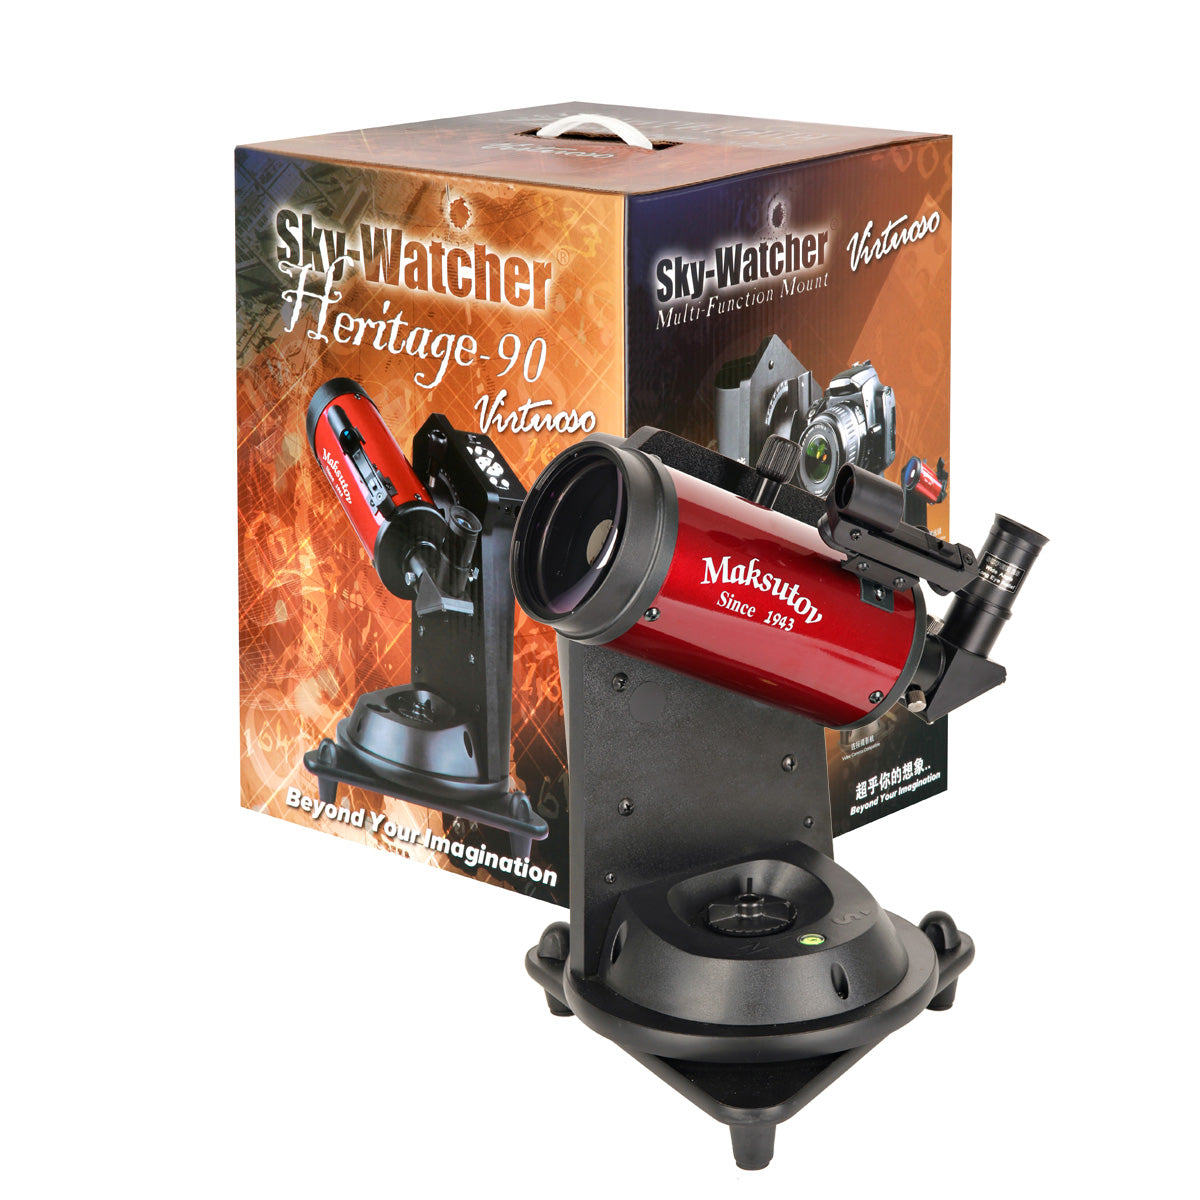 Skywatcher HERITAGE-90 VIRTUOSO Auto Tracking Telescope 10241